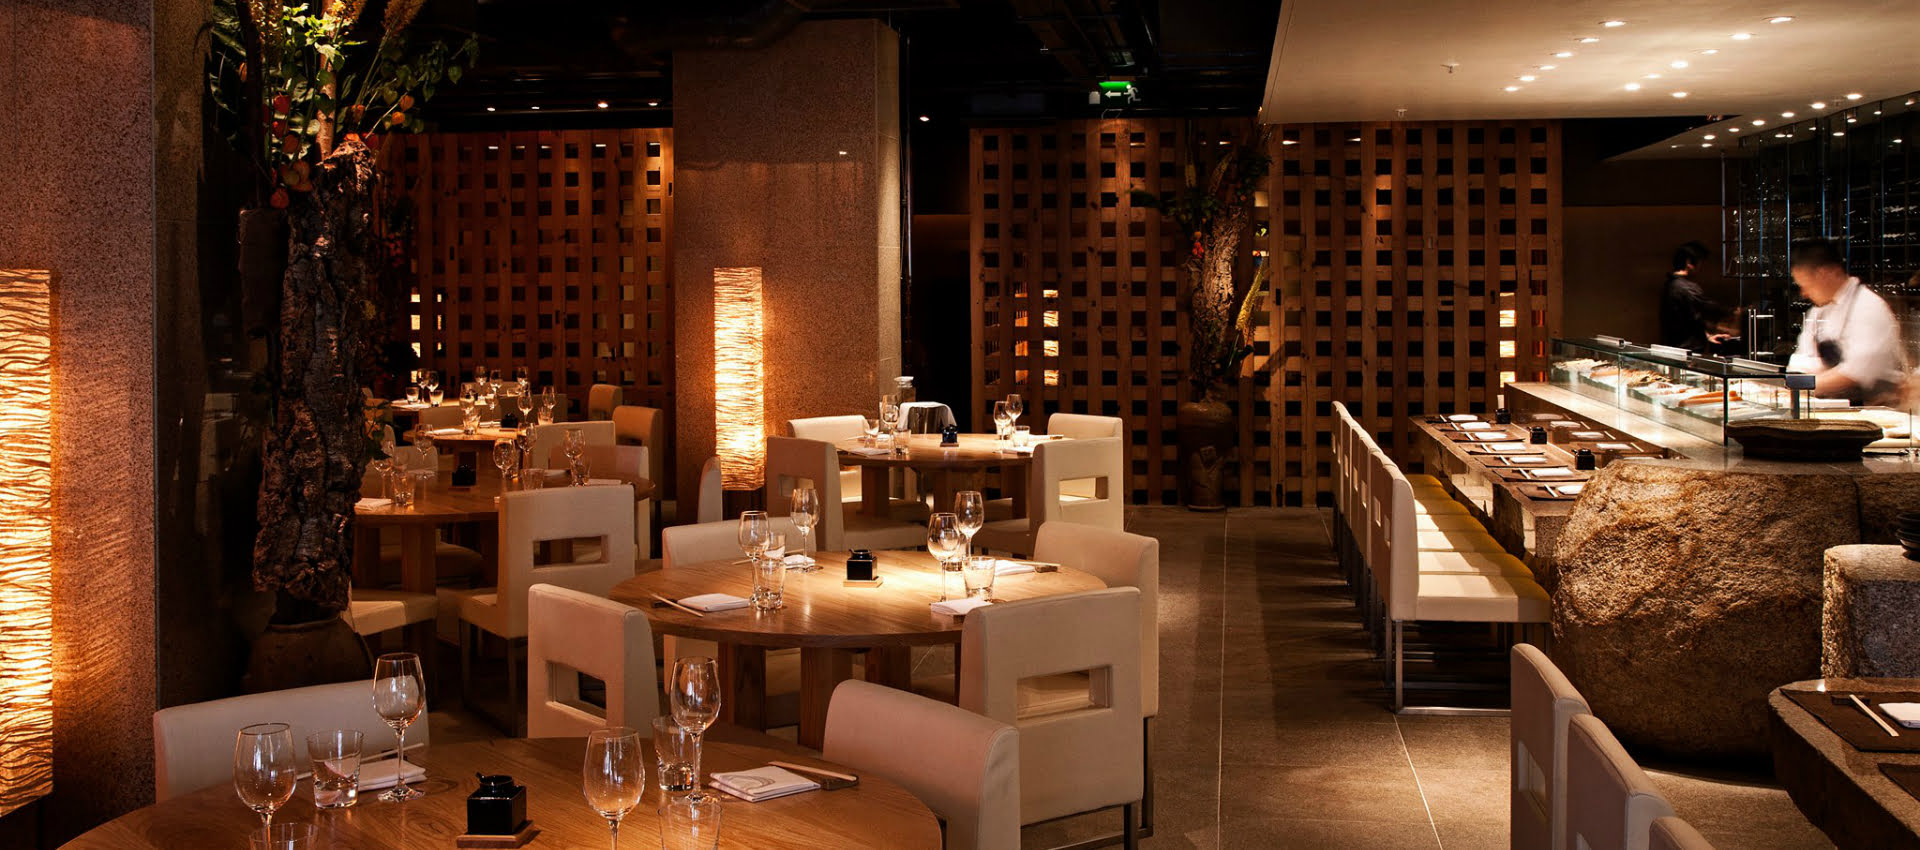 Zuma London - A Sophisticated Izakaya-style Asian restaurant in  Knightsbridge, London